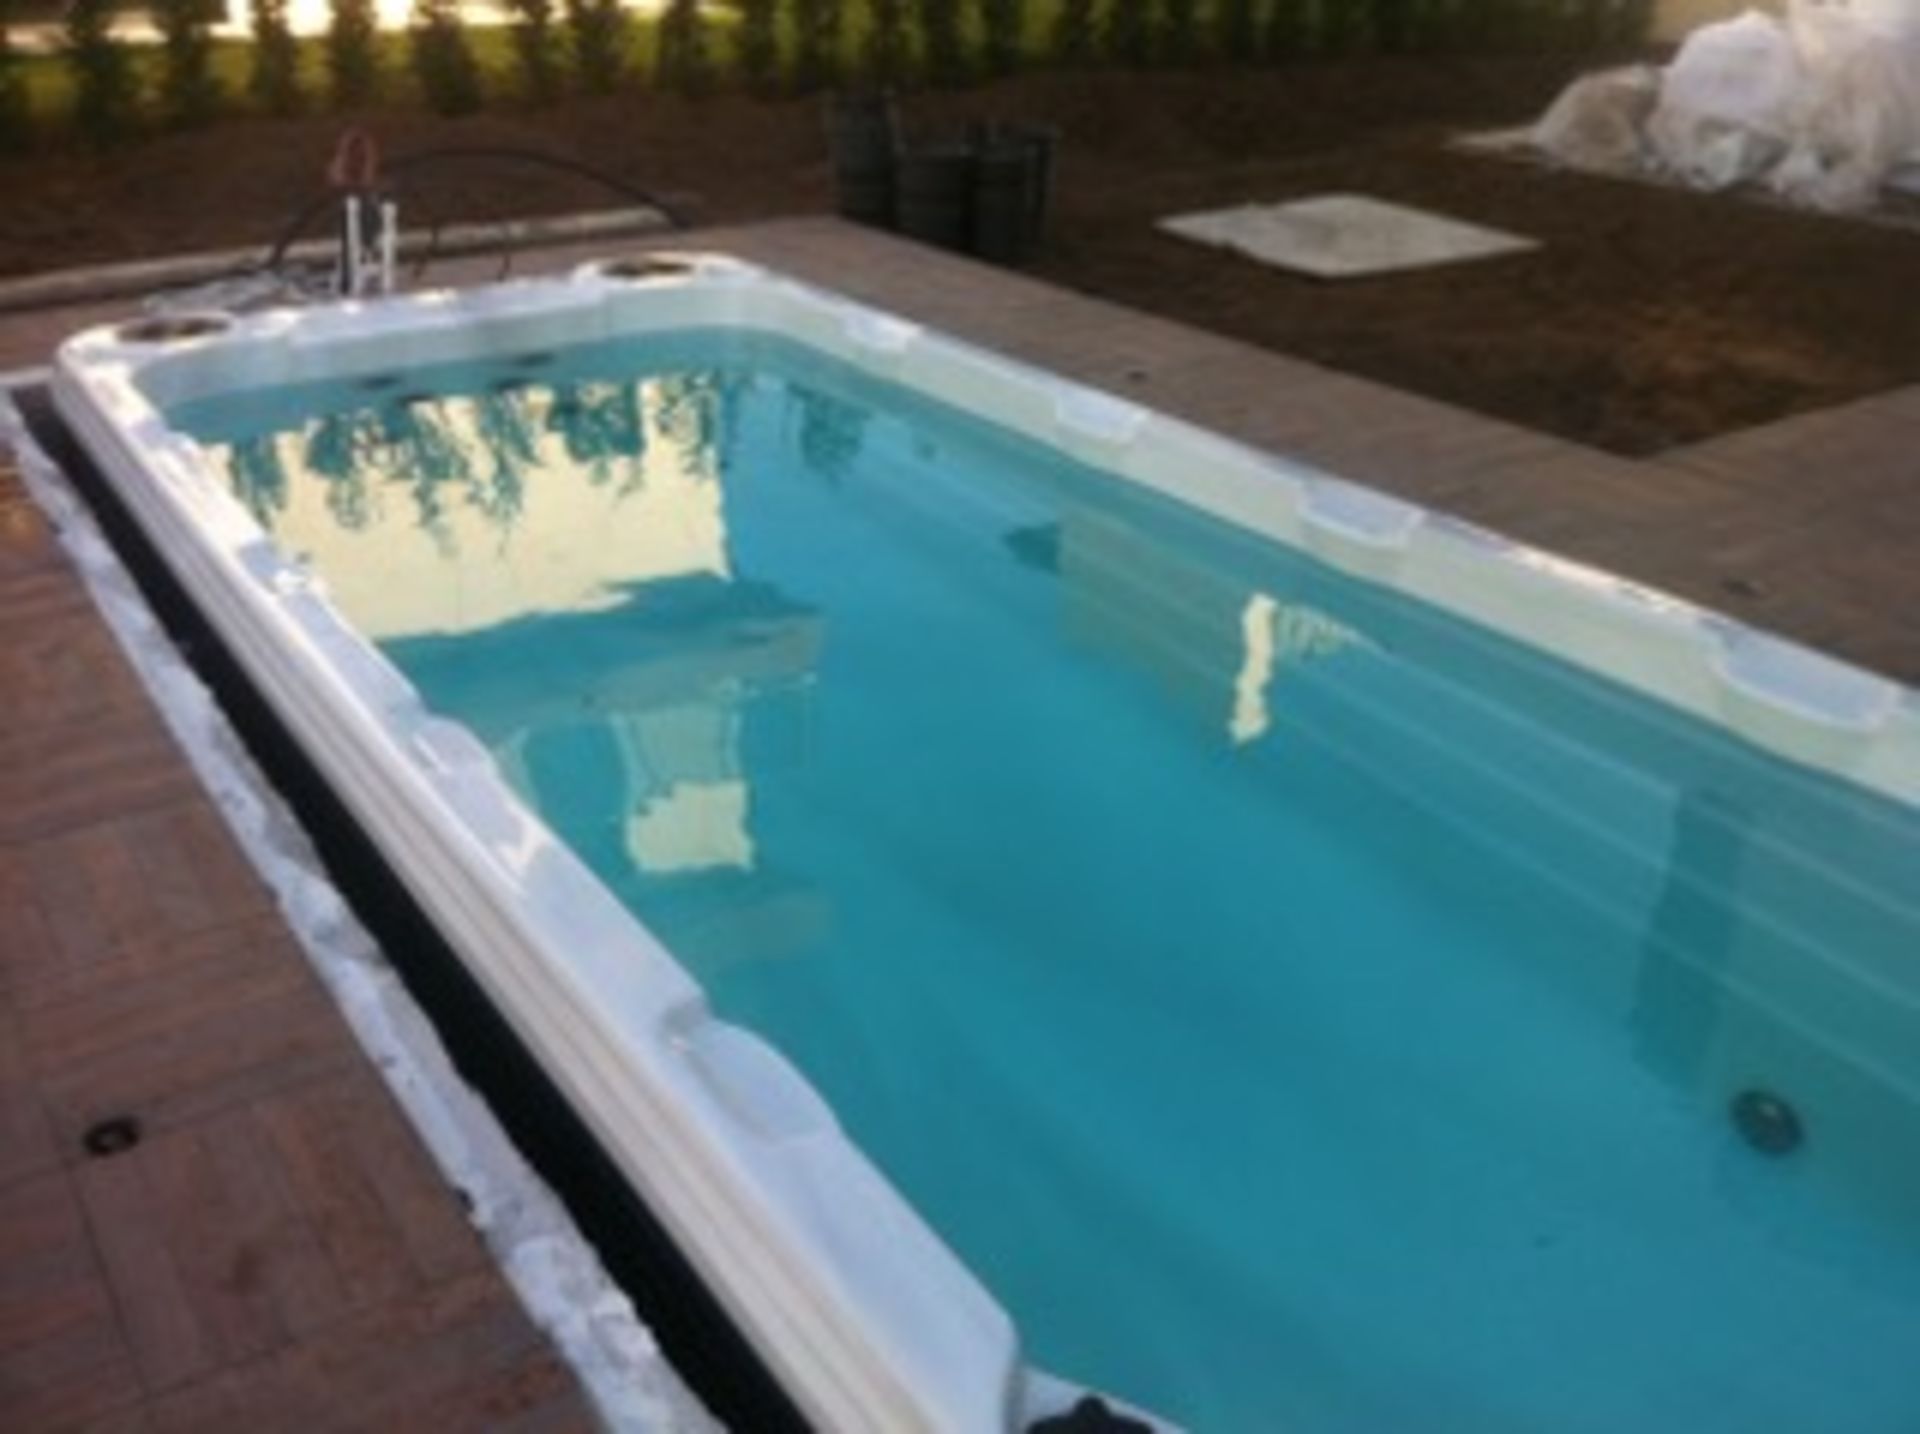 1 x Passion Spa Aquatic 6 - 7.8-Metre Swim Spa - Brand New With Warranty - RRP: £35,000 - Image 2 of 8